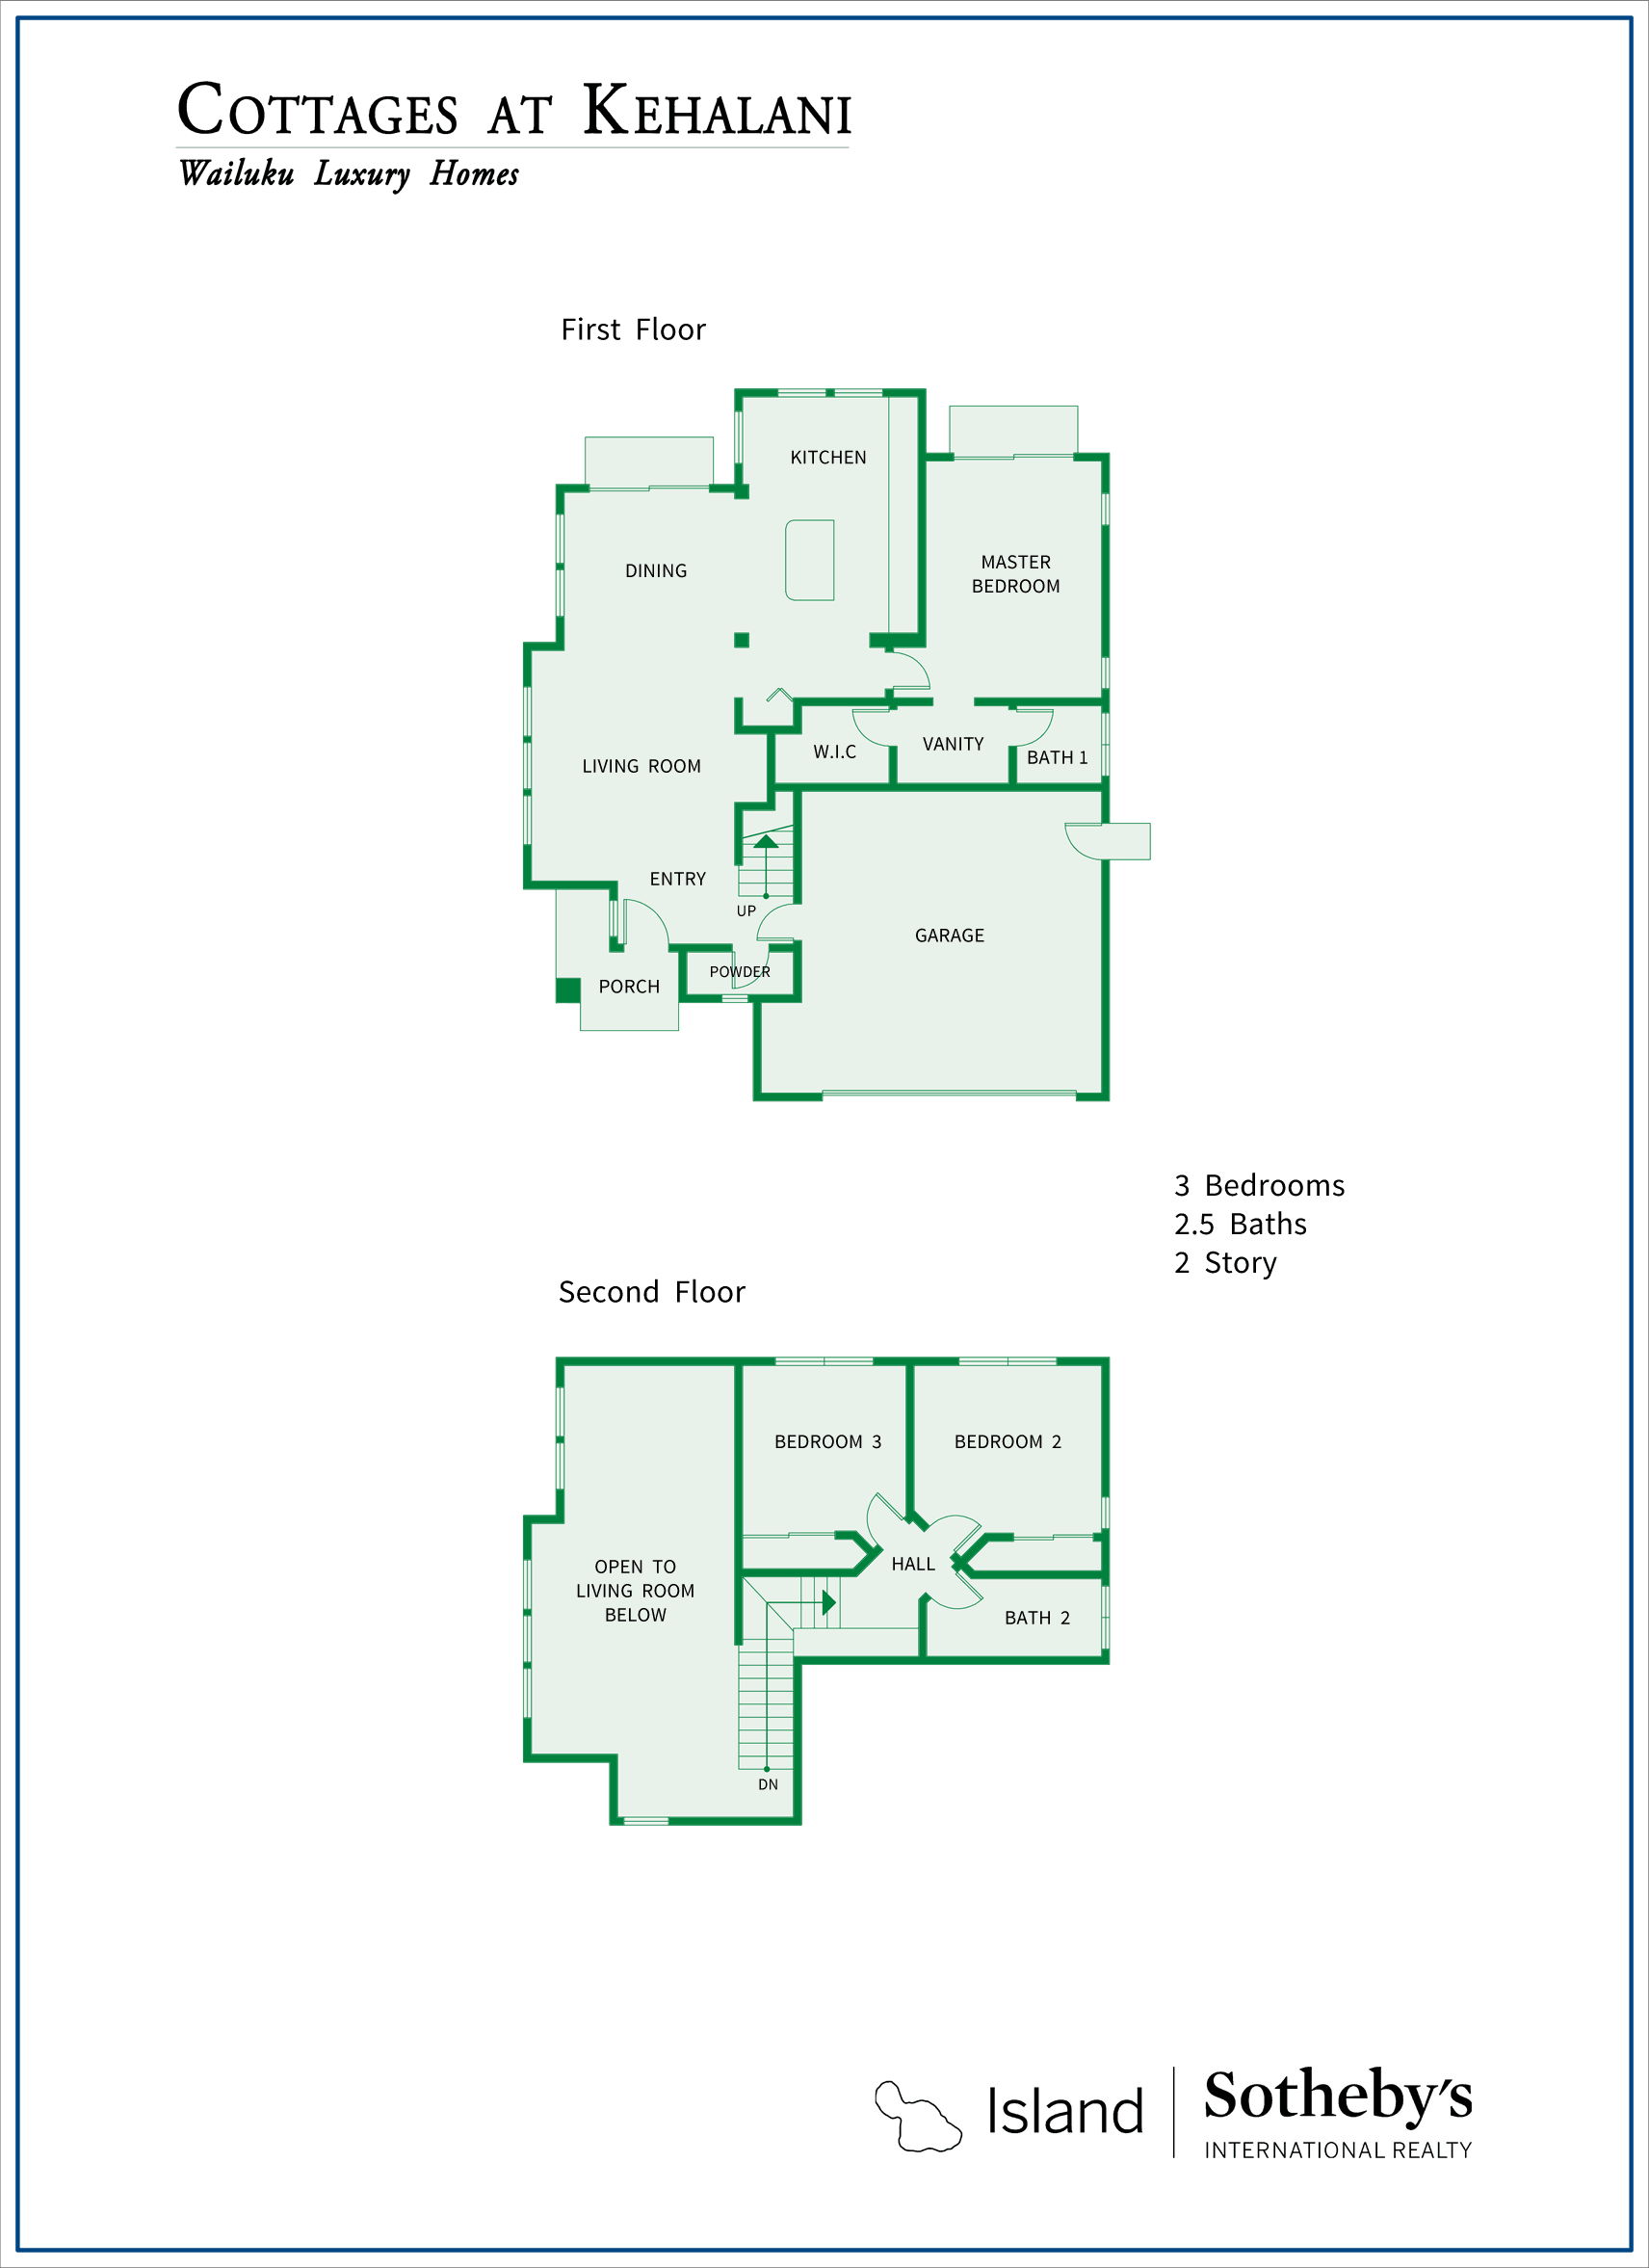 Cottages at Kehalani Floor Plan